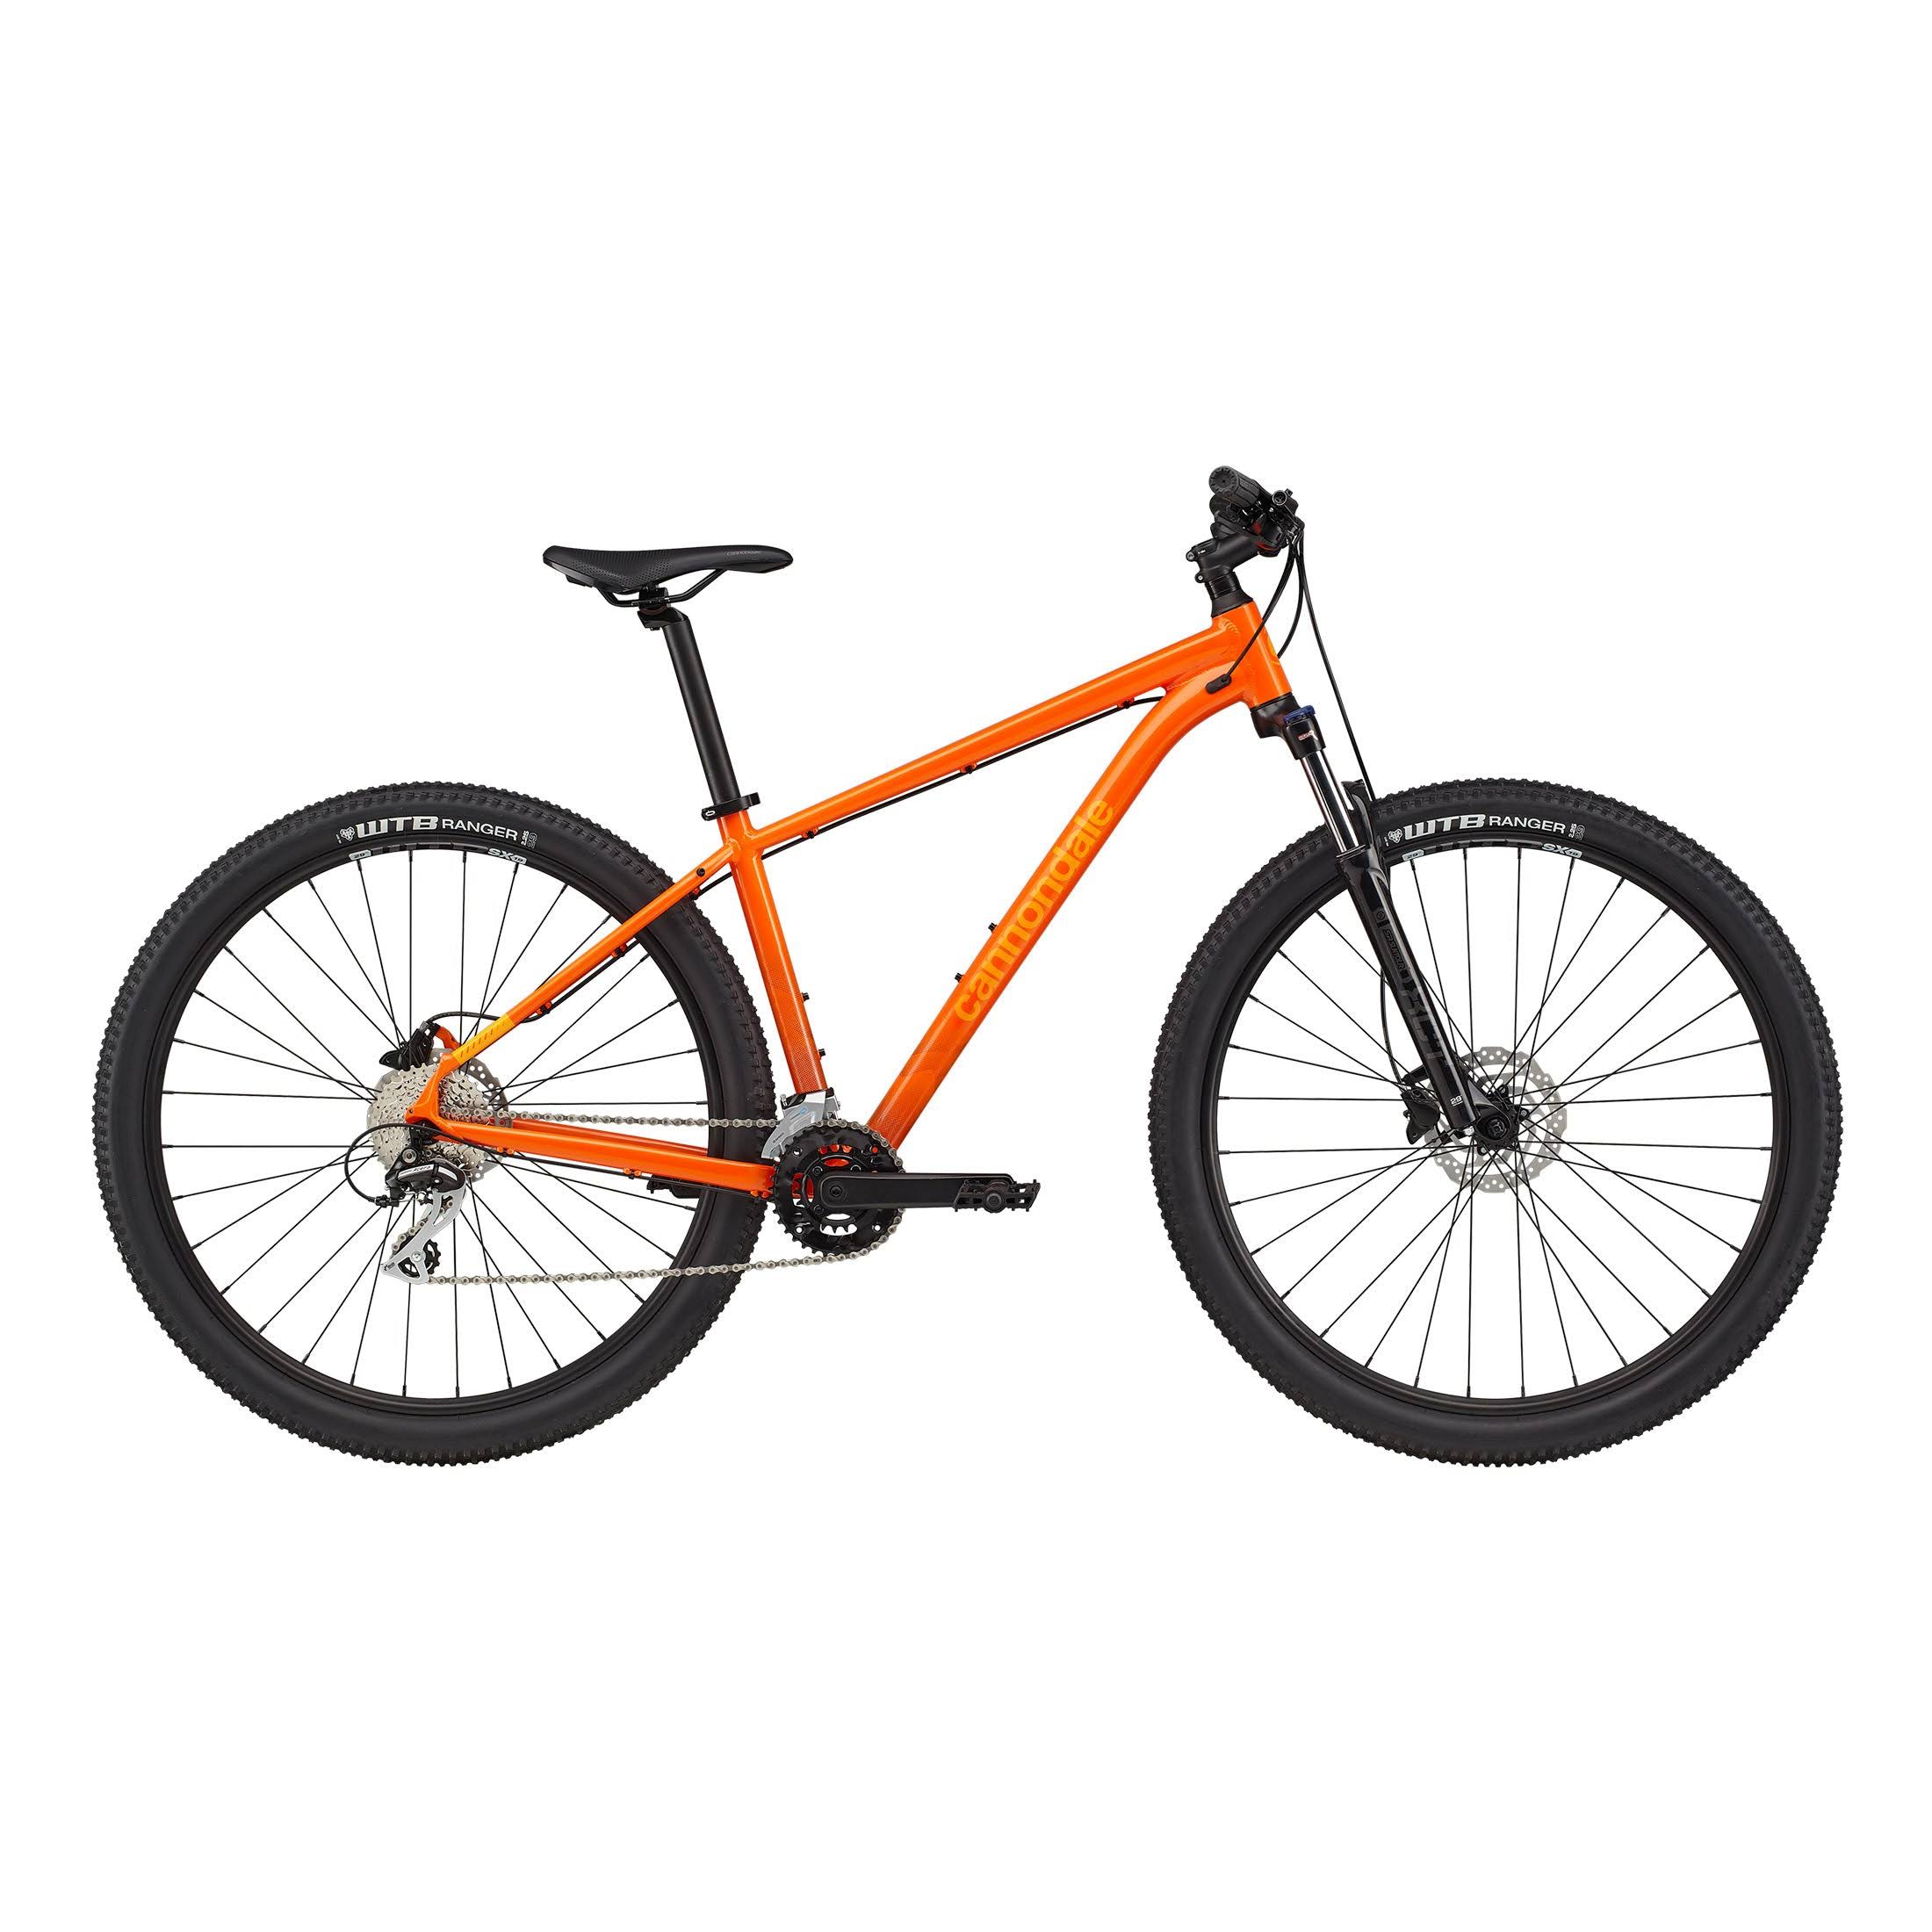 2021 Cannondale Trail 6 Hardtail Mountain Bike - Orange